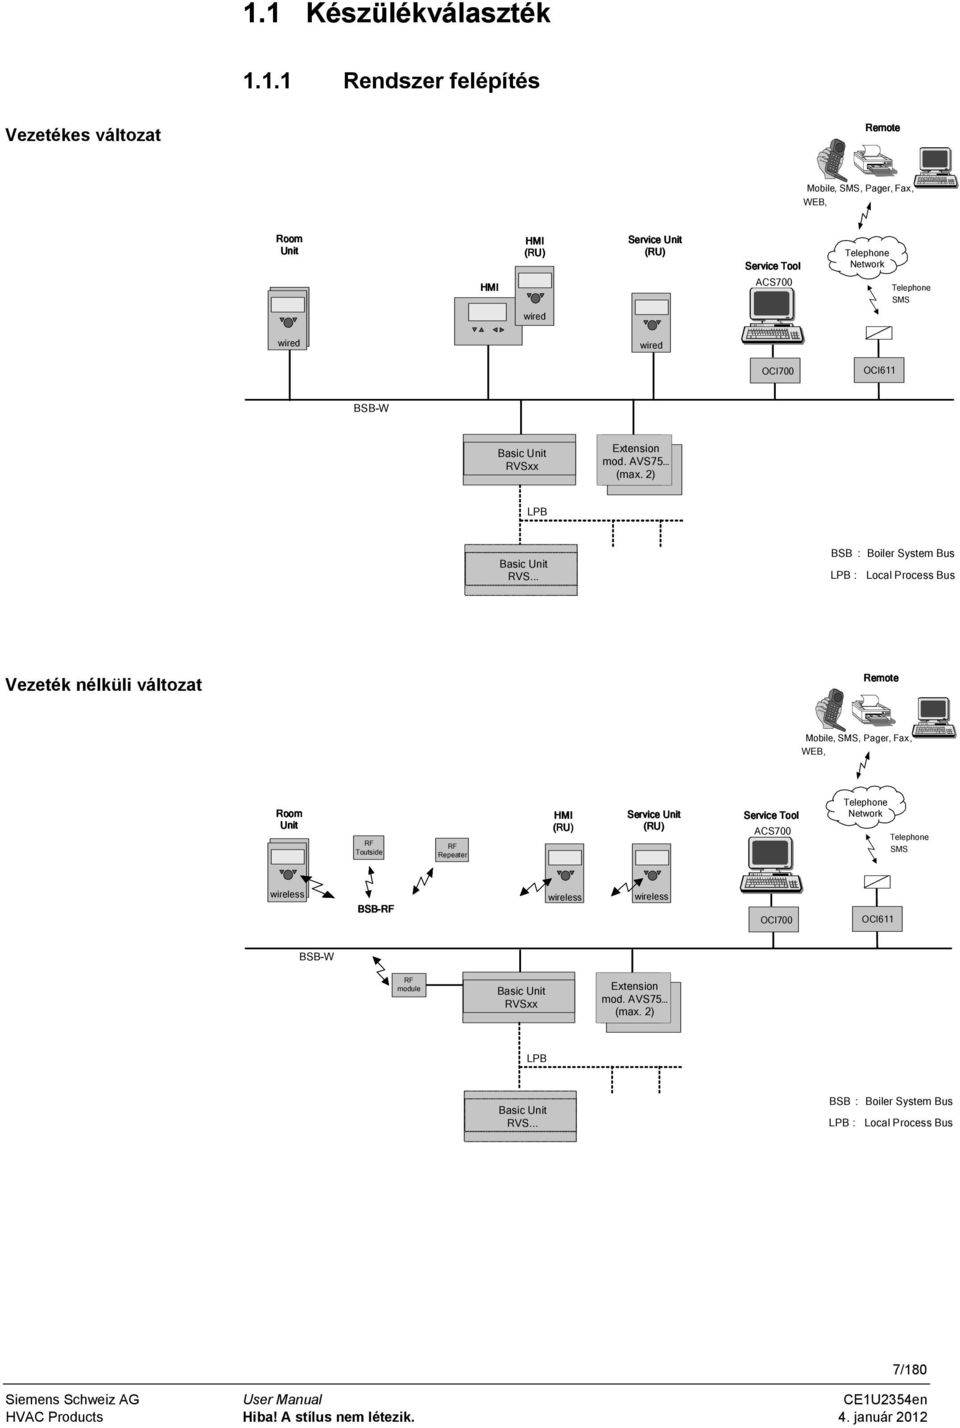 .. BSB : Boiler System Bus LPB : Local Process Bus Vezeték nélküli változat Remote Mobile, SMS, Pager, Fax, WEB, Room Unit RF Toutside RF Repeater HMI (RU RU) Service Unit (RU RU)